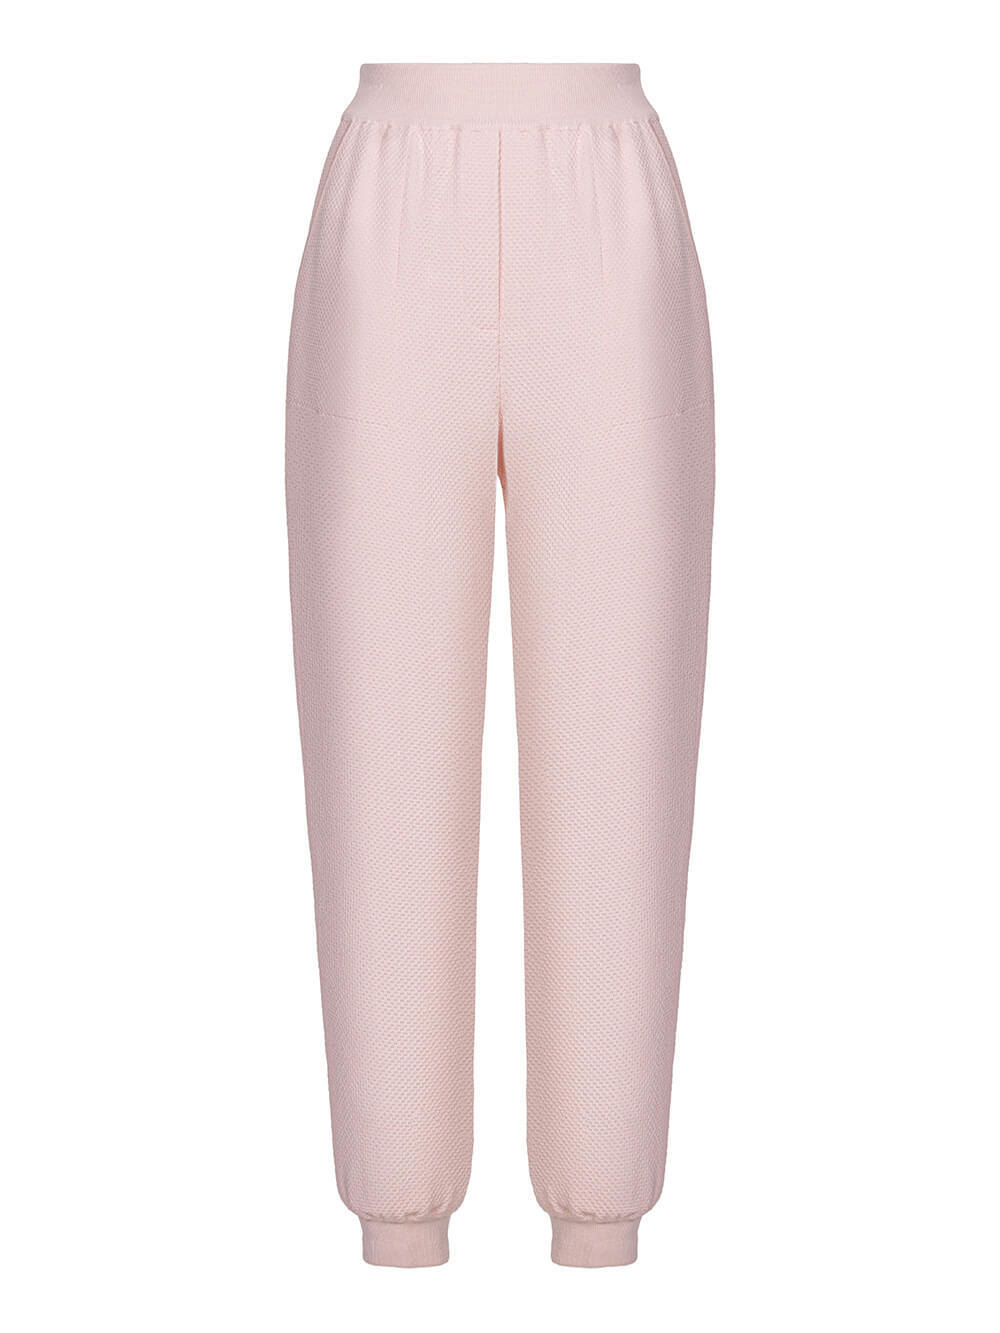 Женские брюки розового цвета из 100% шелка